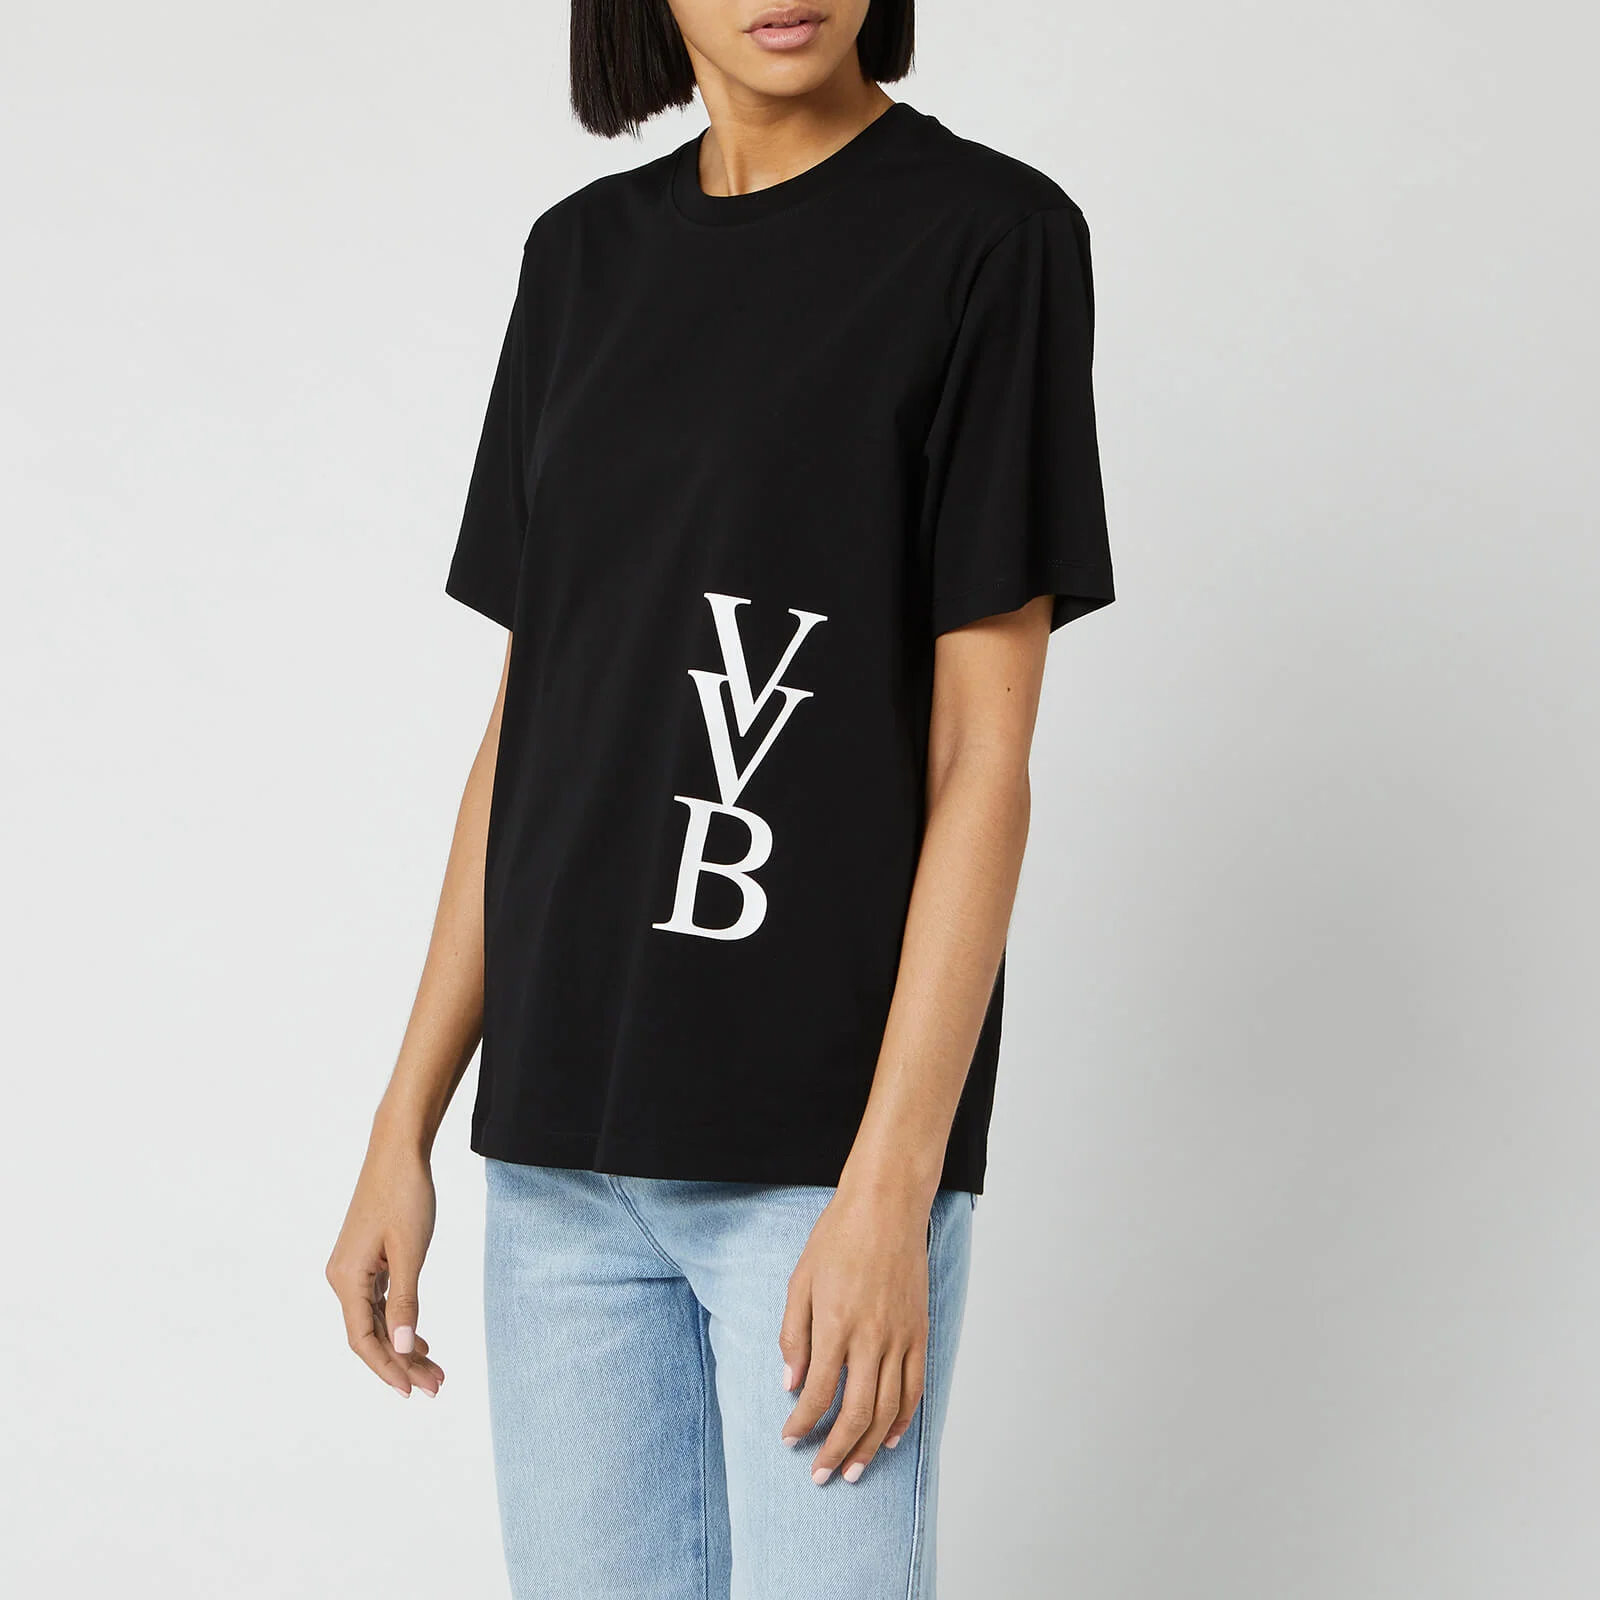 Victoria, Victoria Beckham Women's Raised Logo T-Shirt - Black Image 1